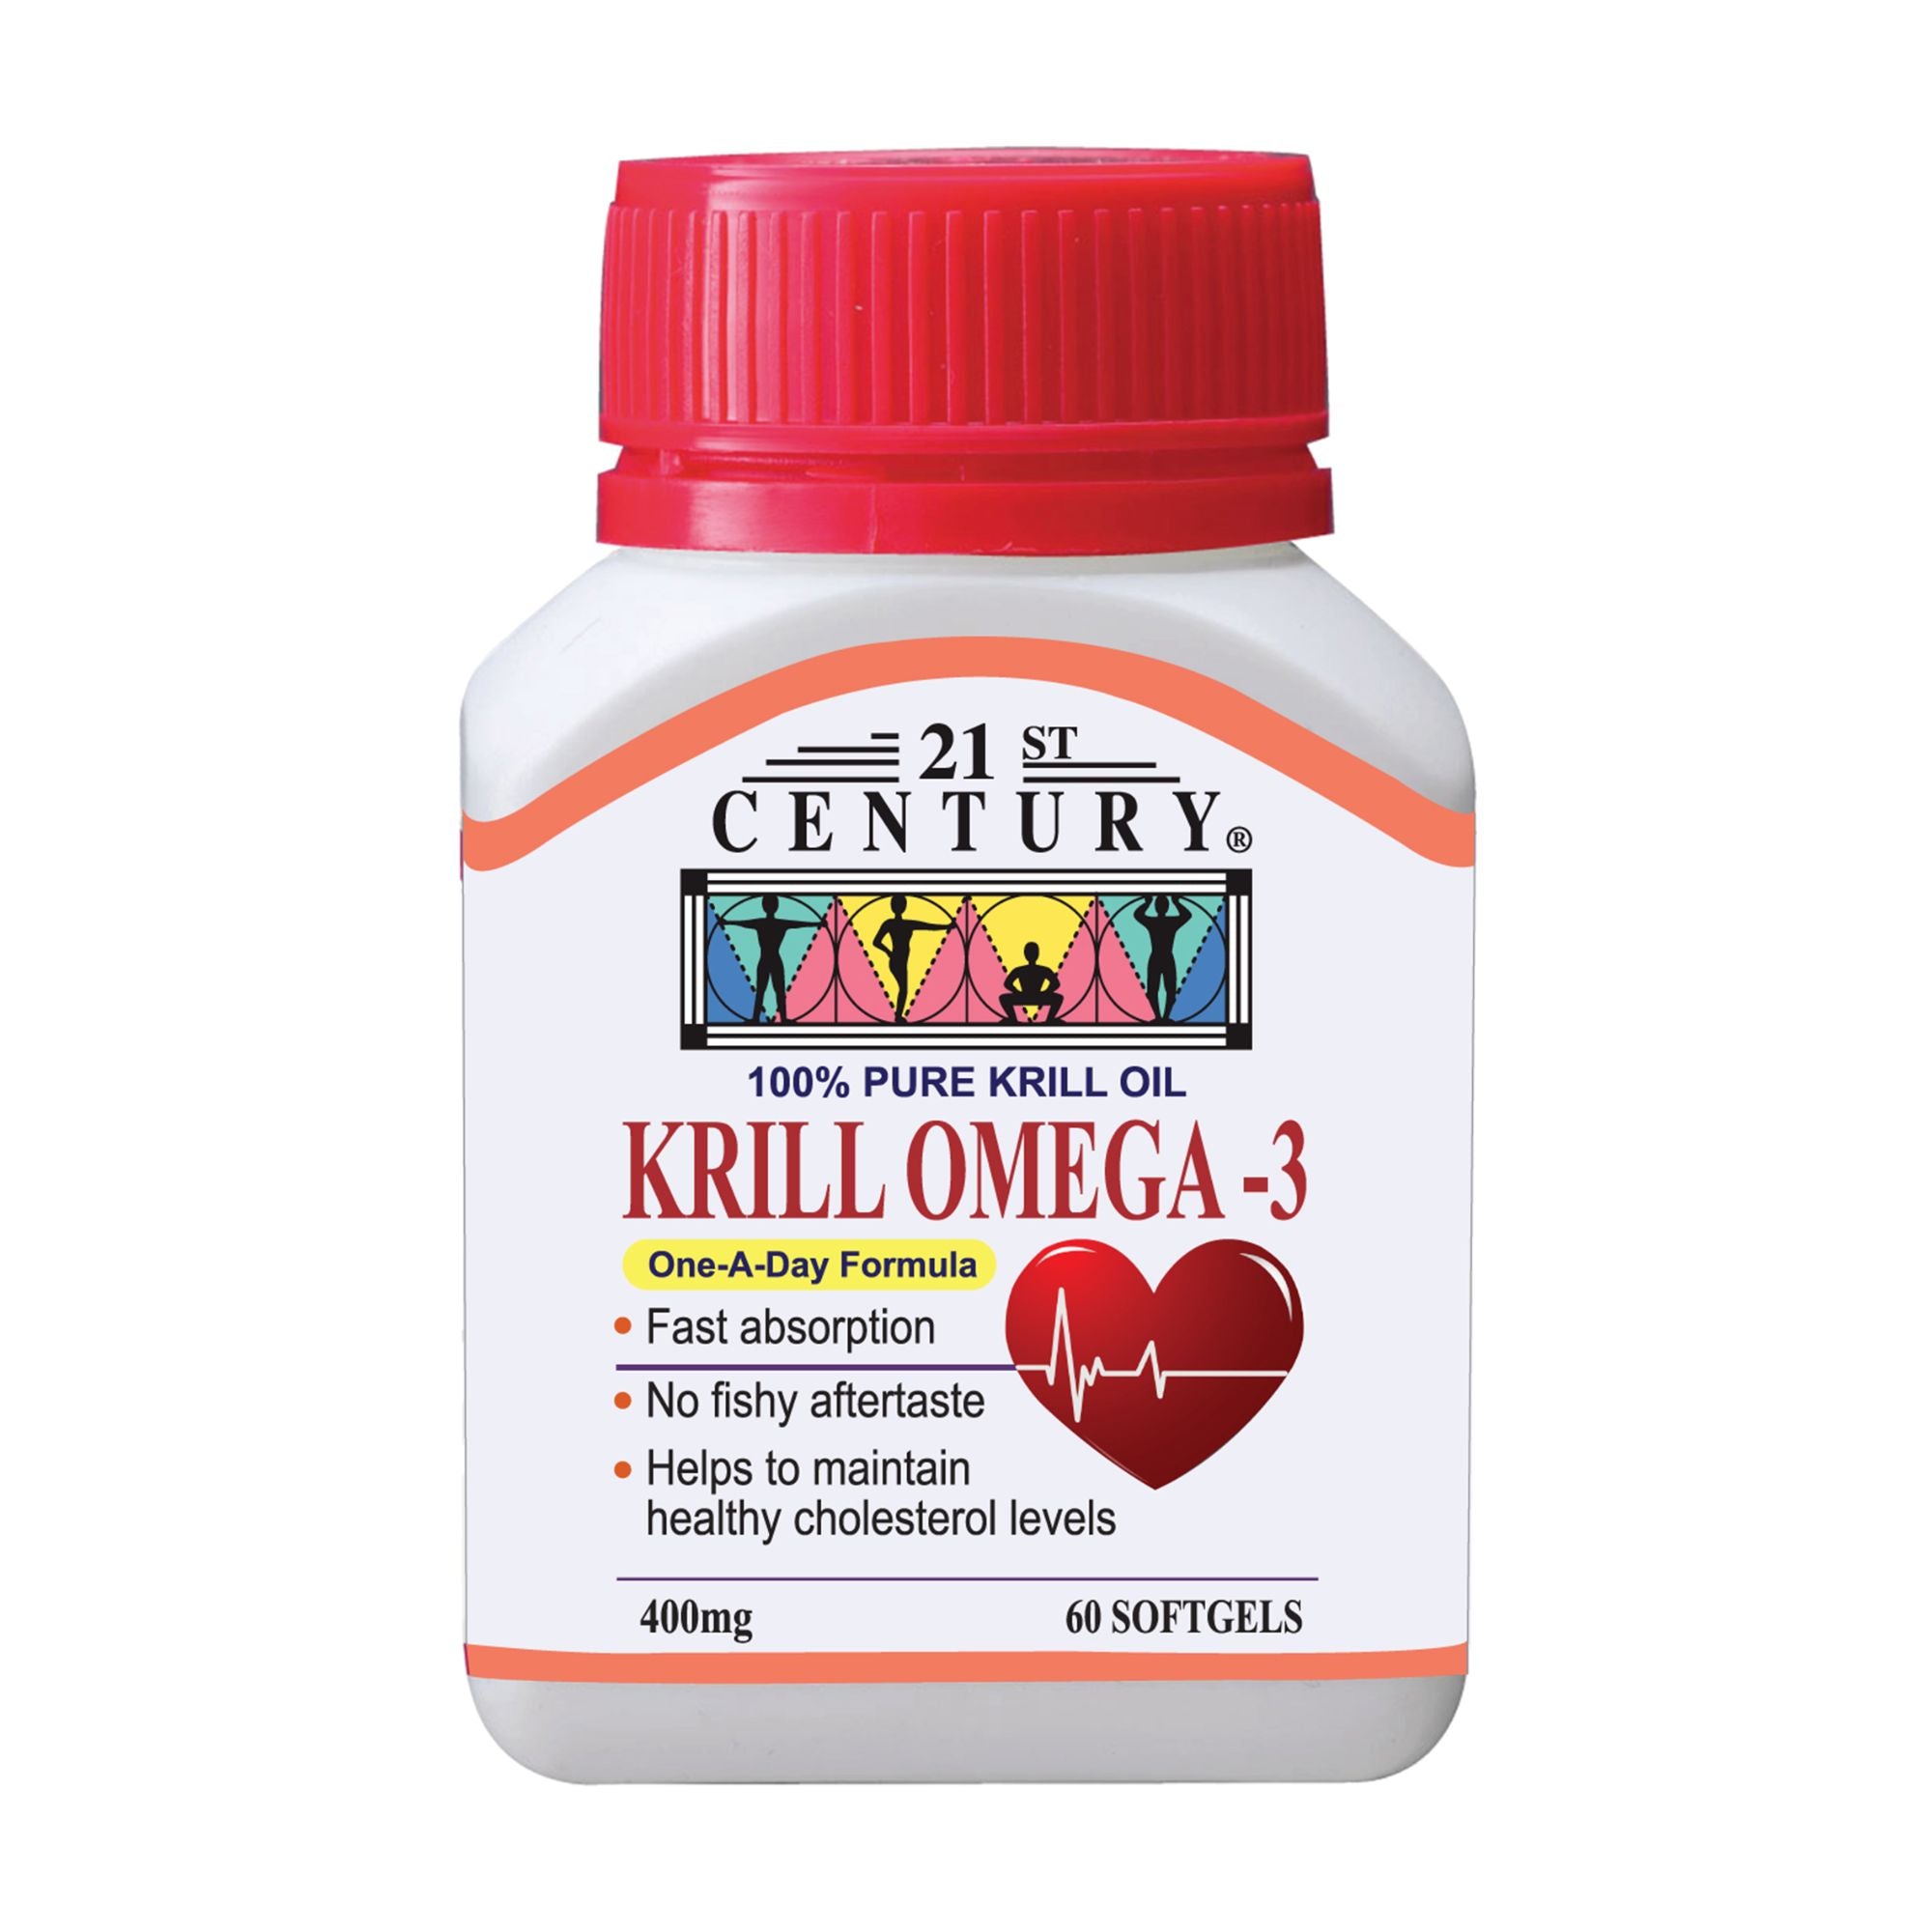 21ST CENTURY Krill Omega-3 400 mg 60 Softgels